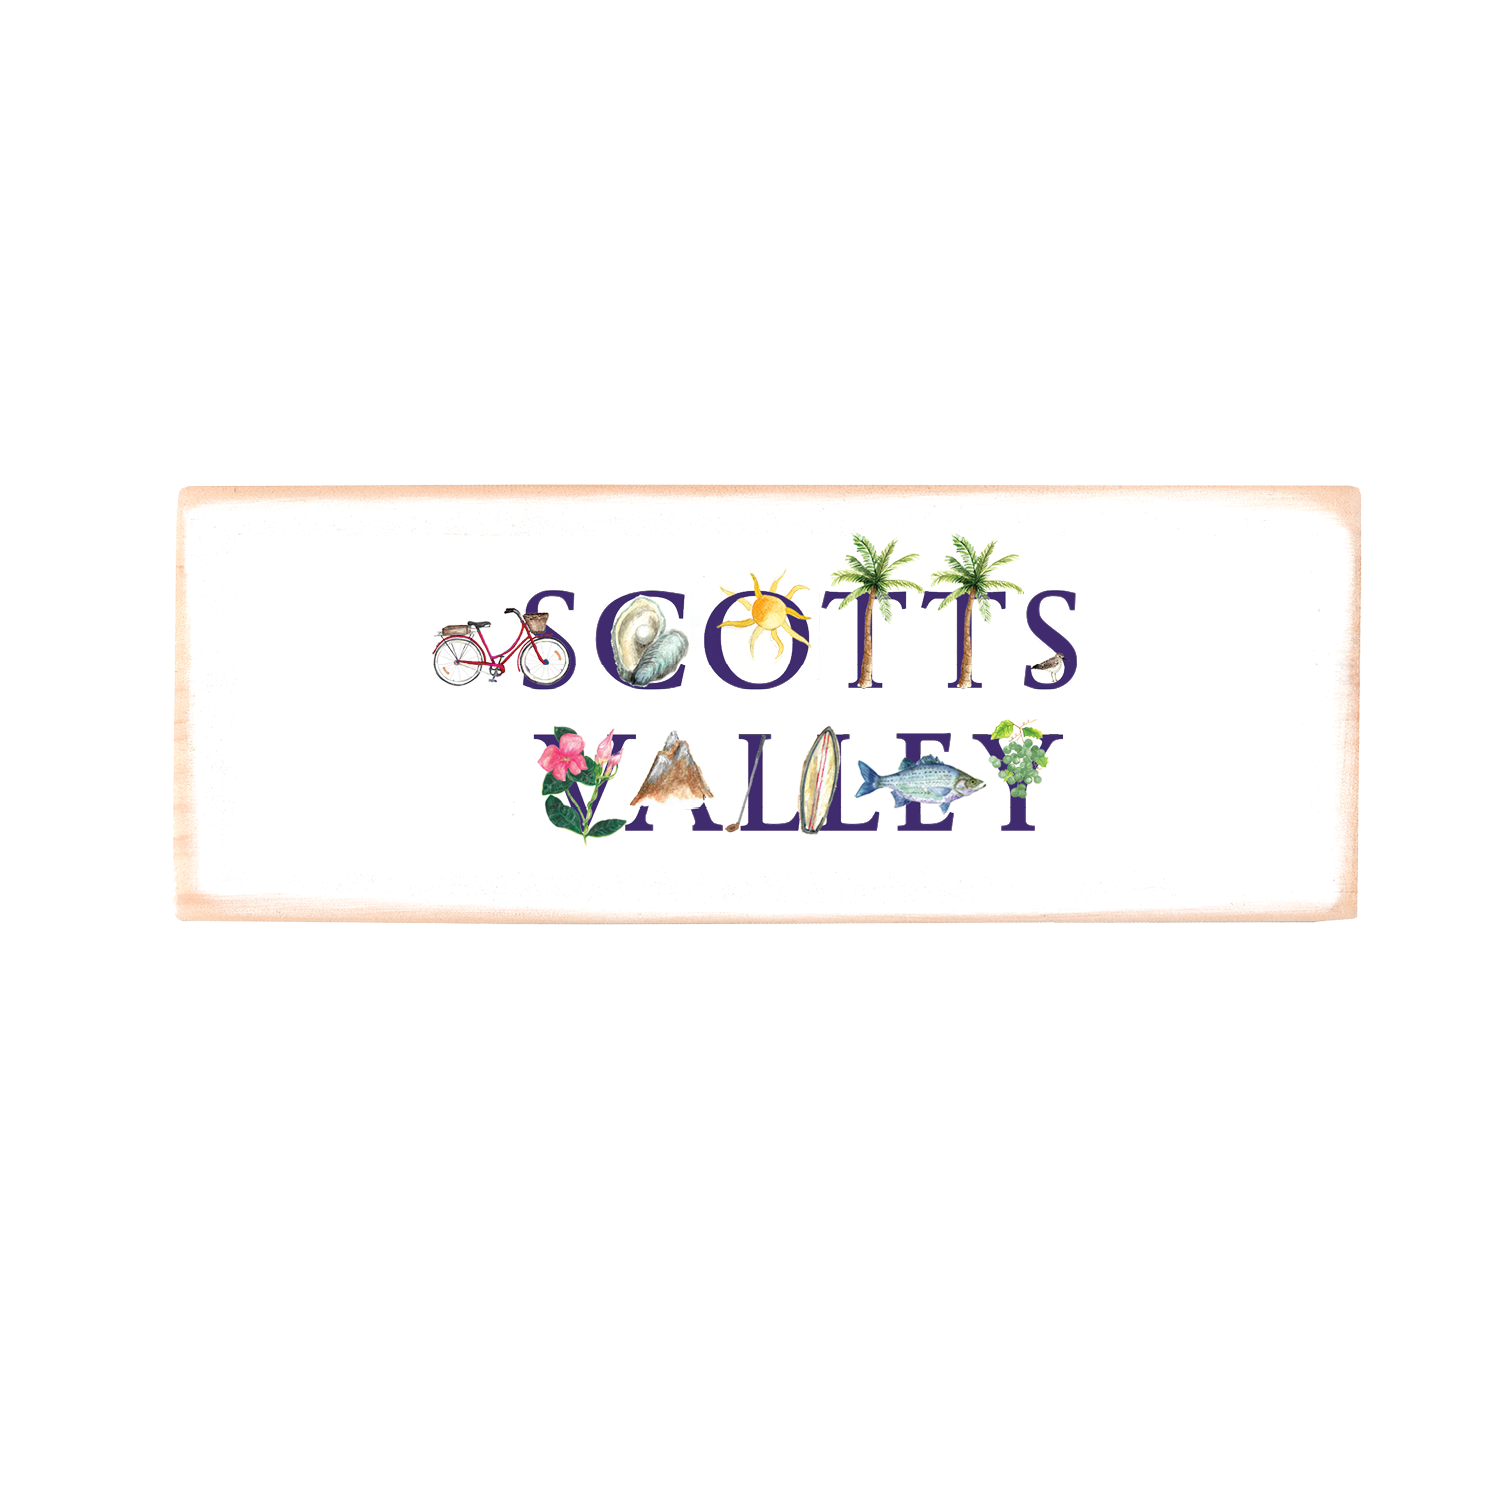 scotts valley rectangle wood block